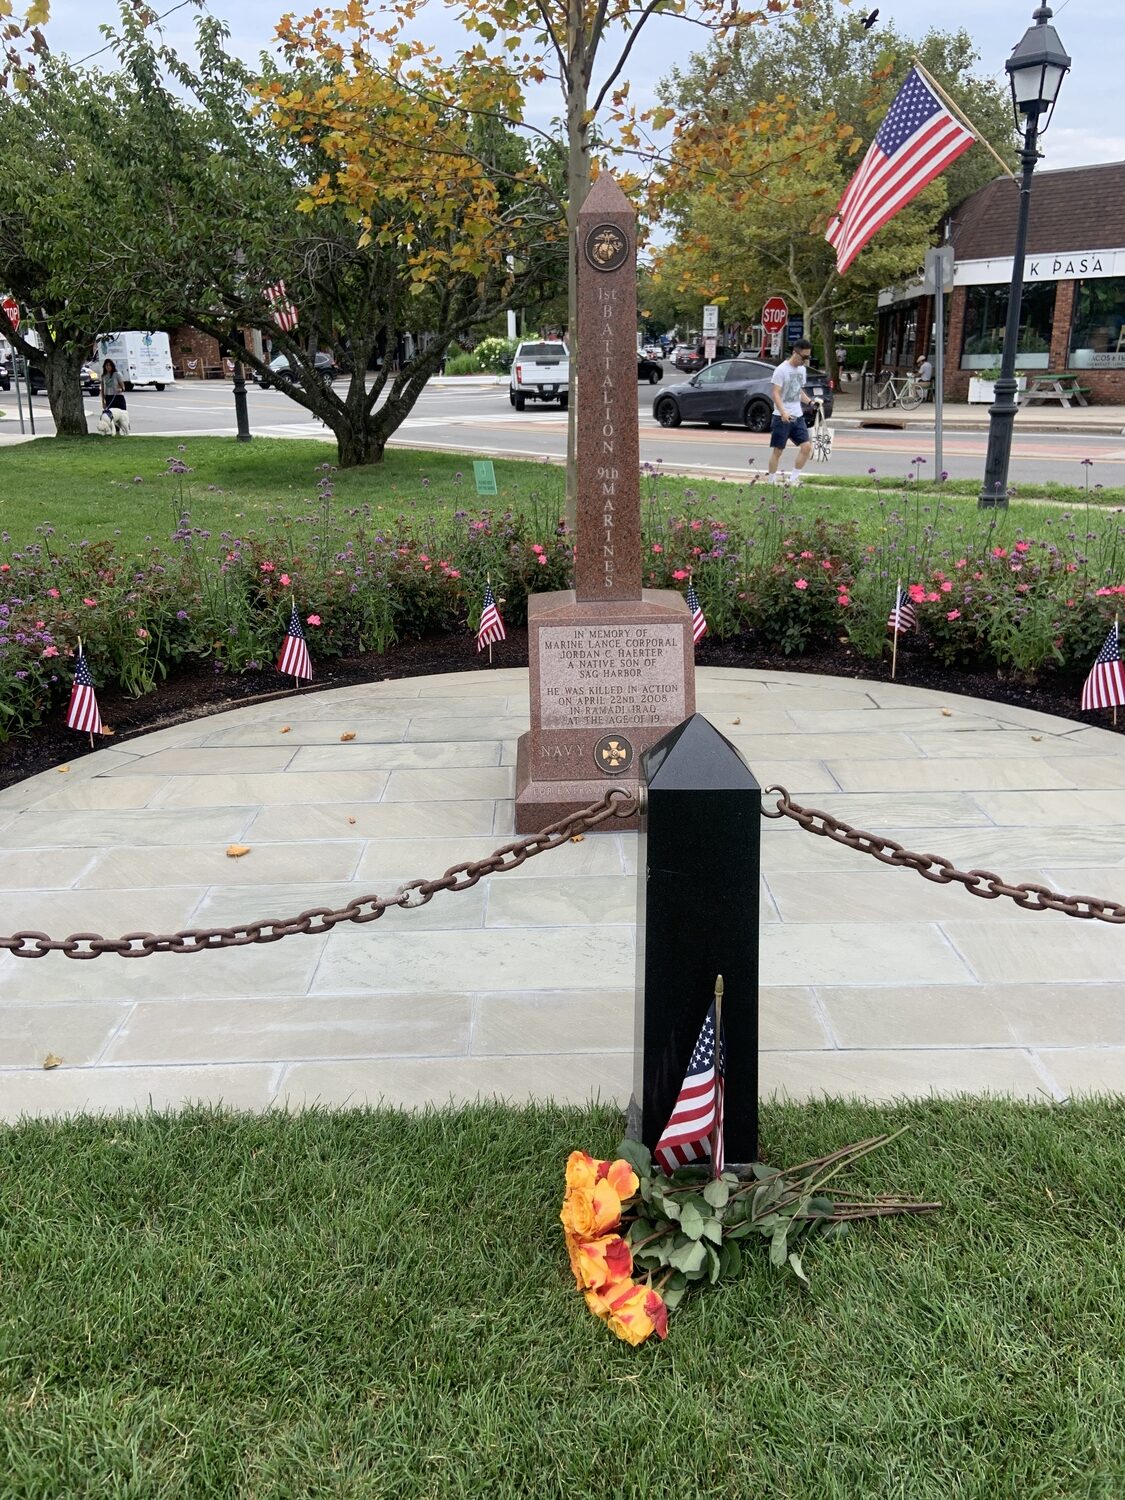 After extensive site work, a memorial monument for U.S. Marine Lance Cpl. Jordan Haerter is now more visible. STEPHEN J. KOTZ